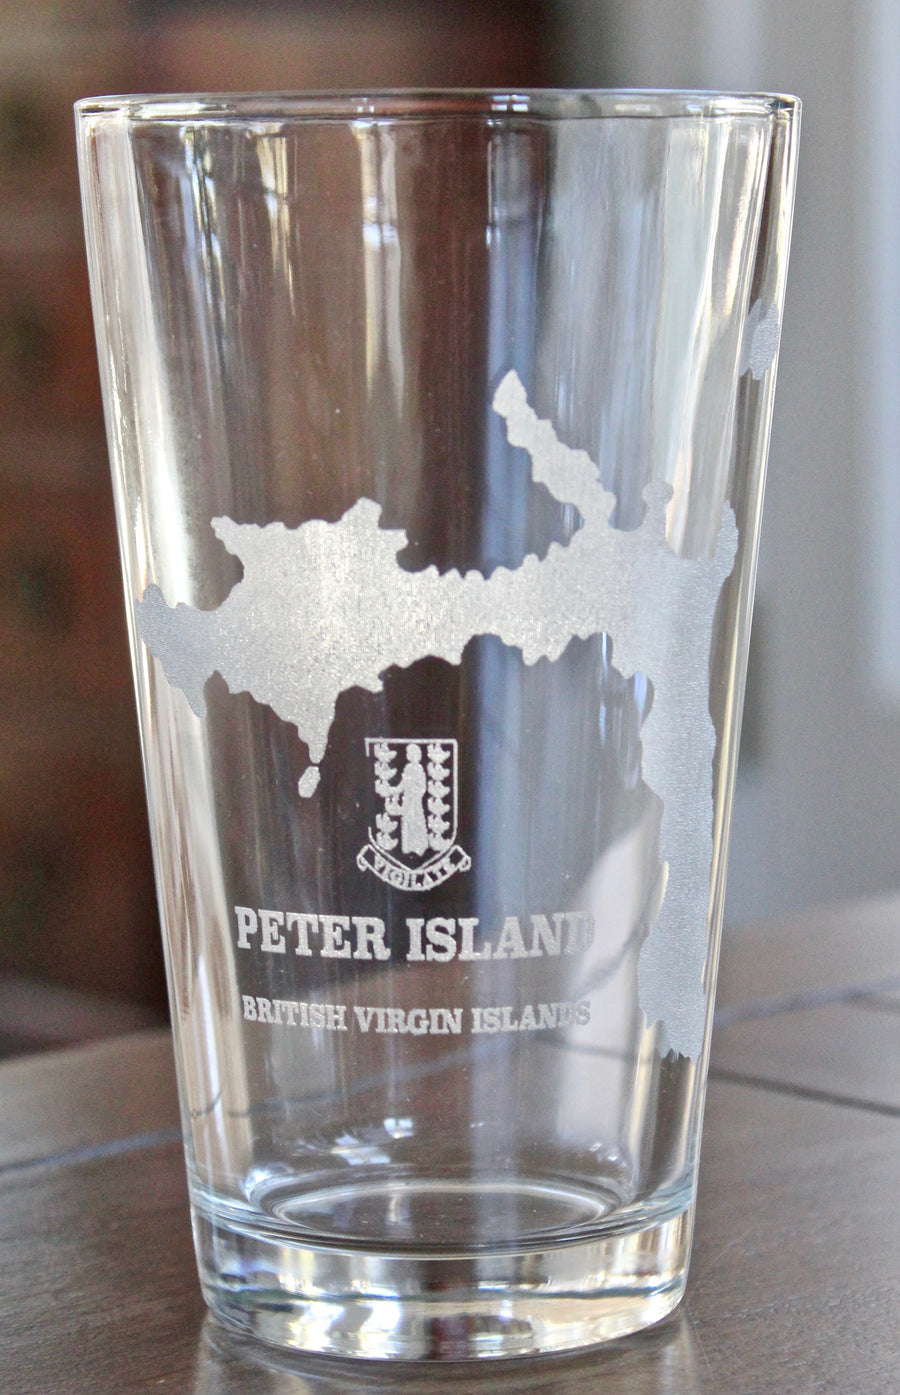 Peter Island BVI Map Engraved Glasses